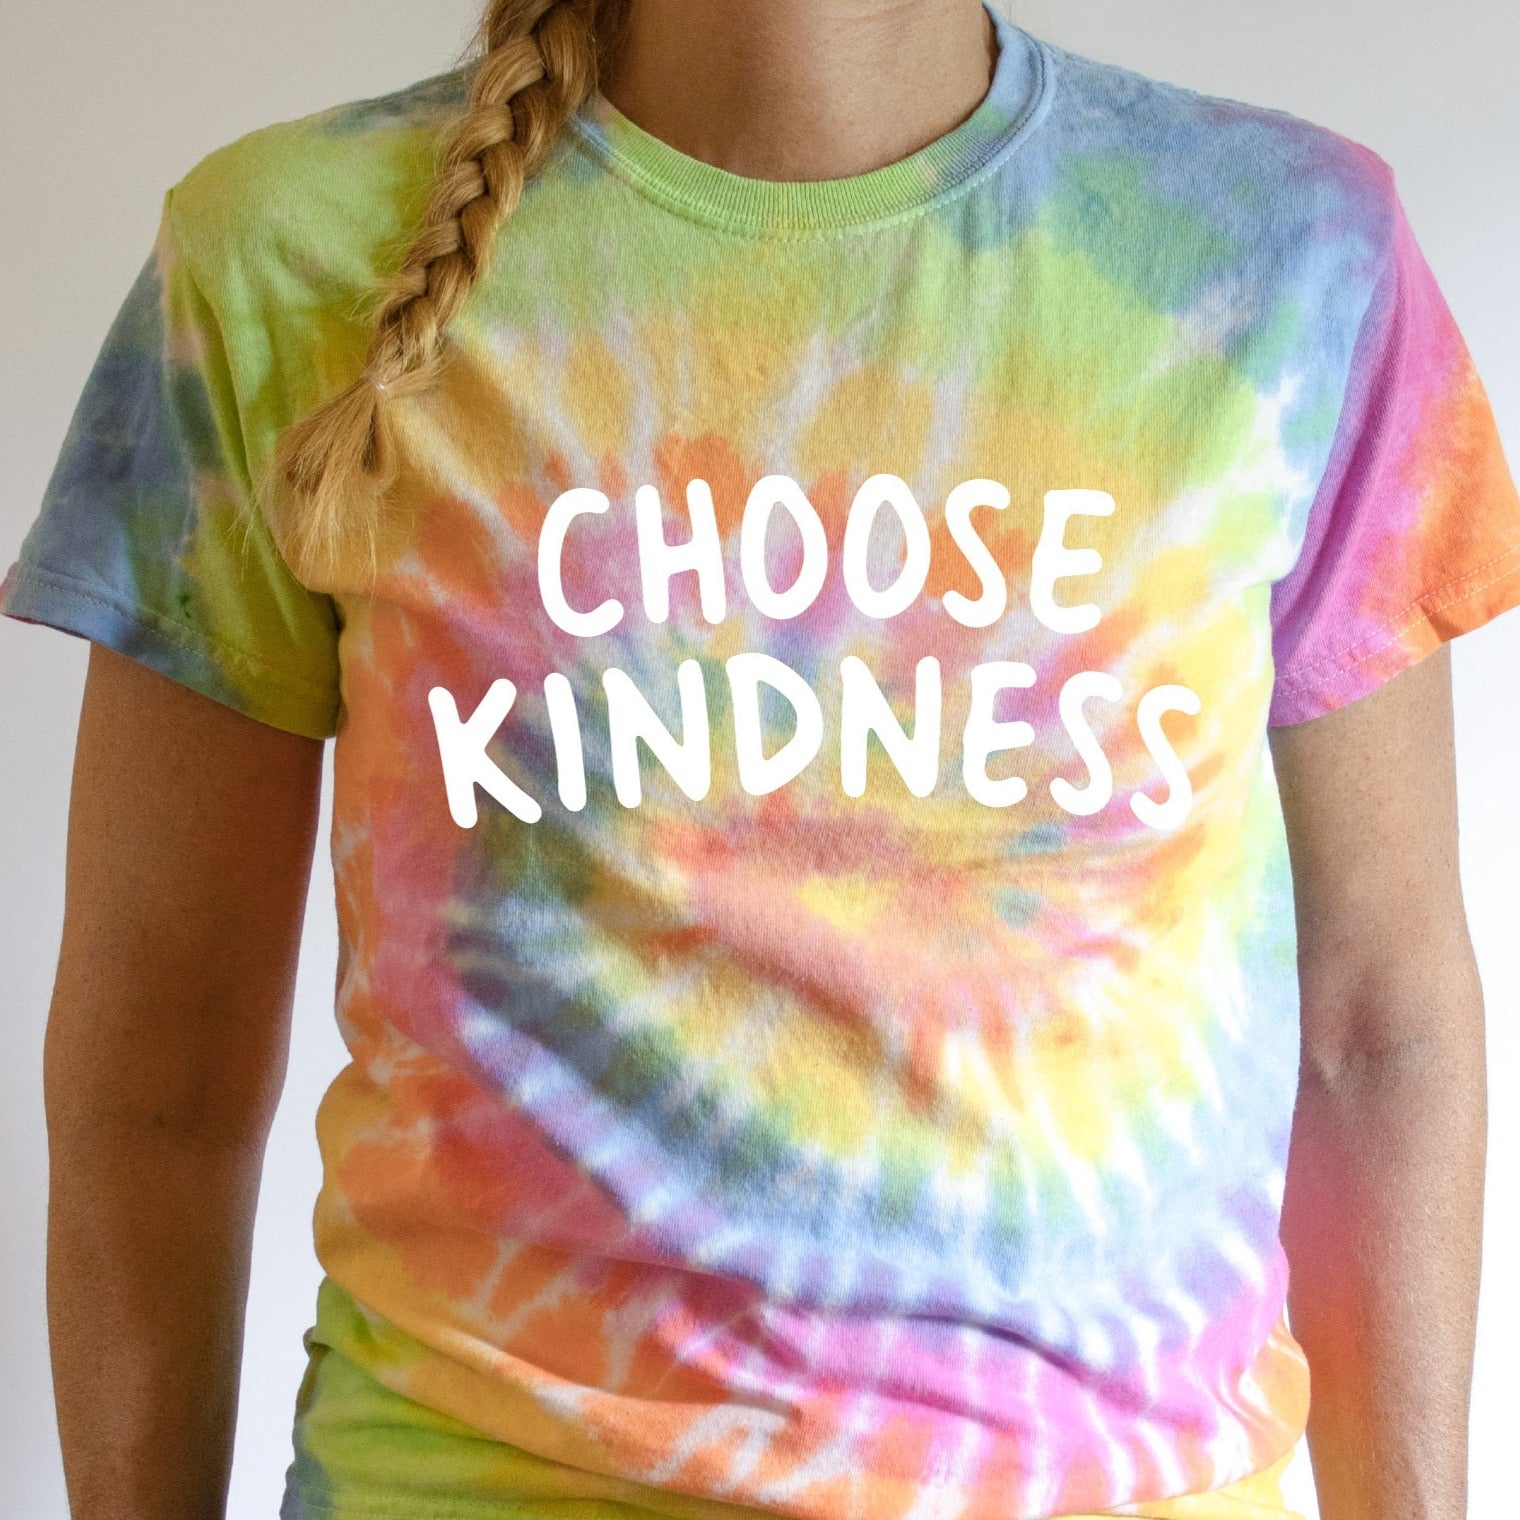 Tie Dye CHOOSE KINDNESS: Printed T-Shirt